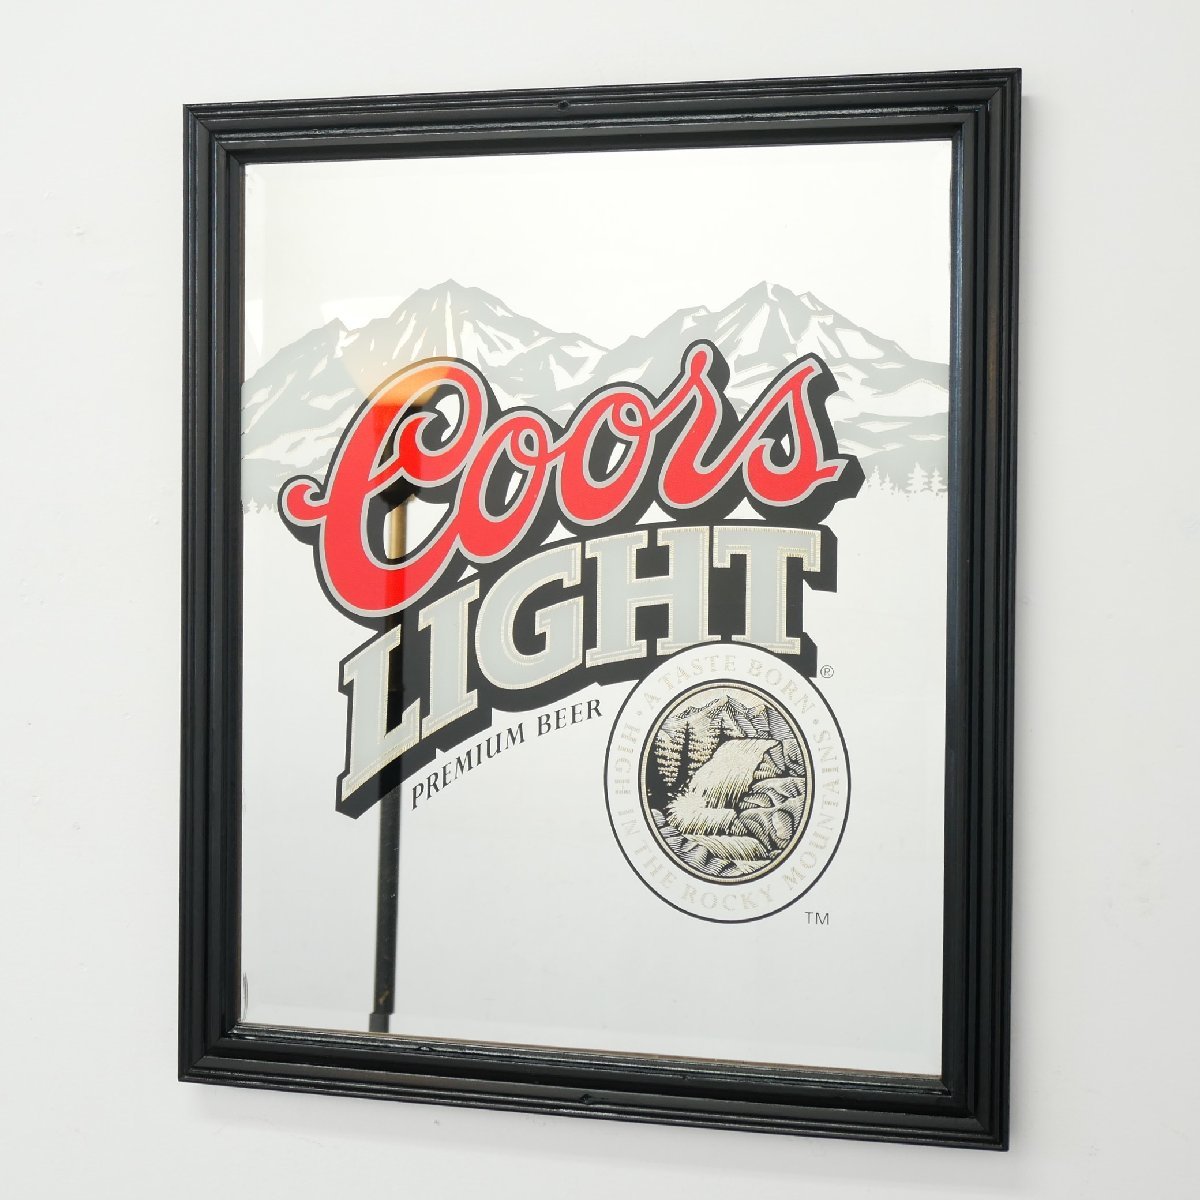 Coors LIGHT ヴィンテージ パブミラー / アメリカ ビール 額装 1999年製 アドバタイジング 広告 #510-10-83-107